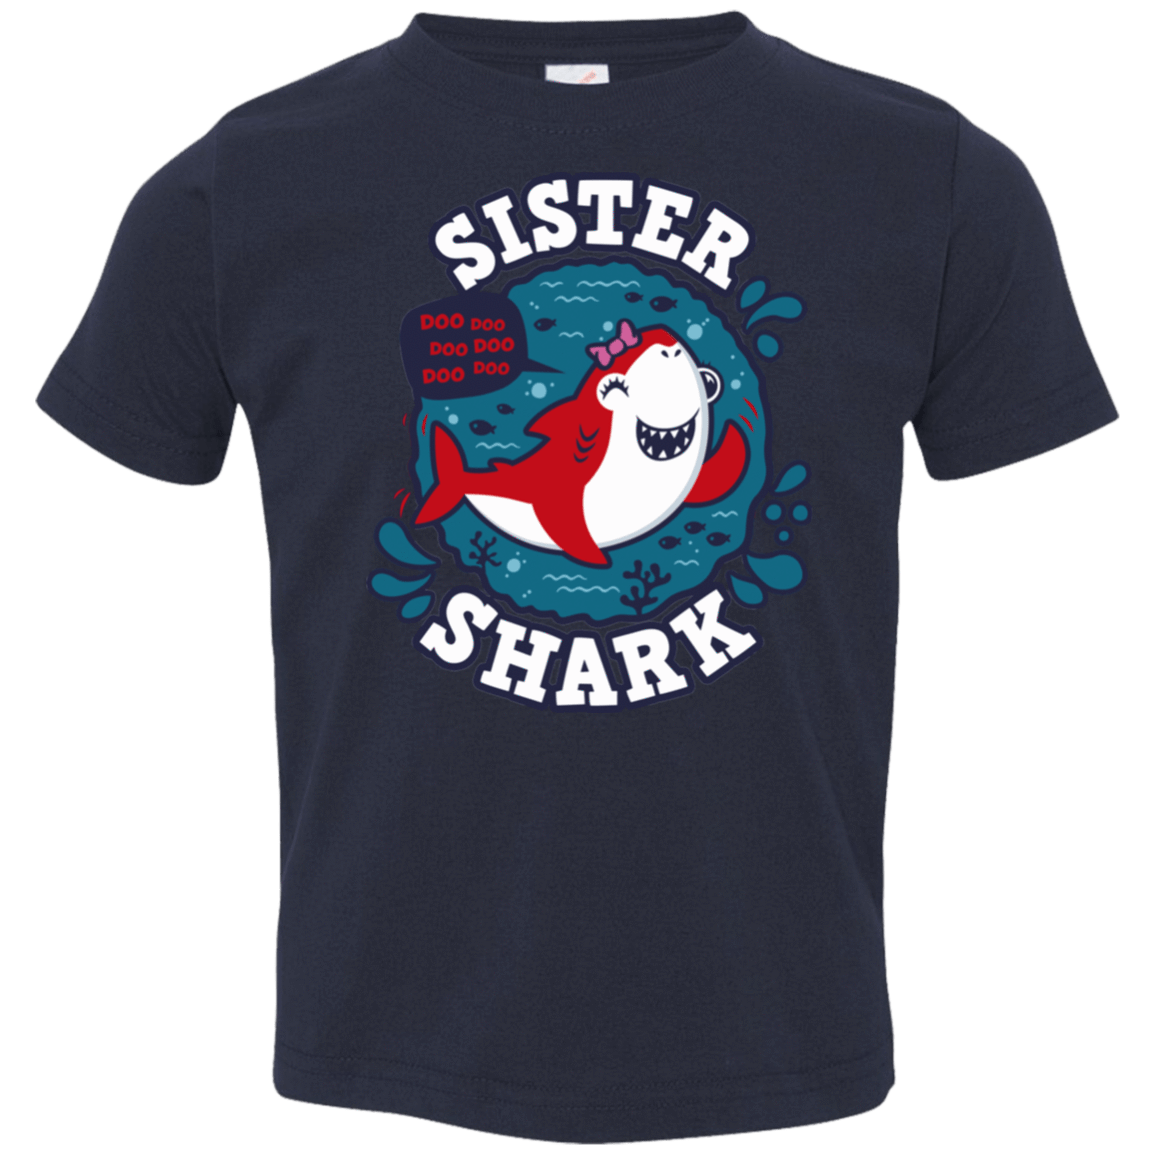 T-Shirts Navy / 2T Shark Family trazo - Sister Toddler Premium T-Shirt